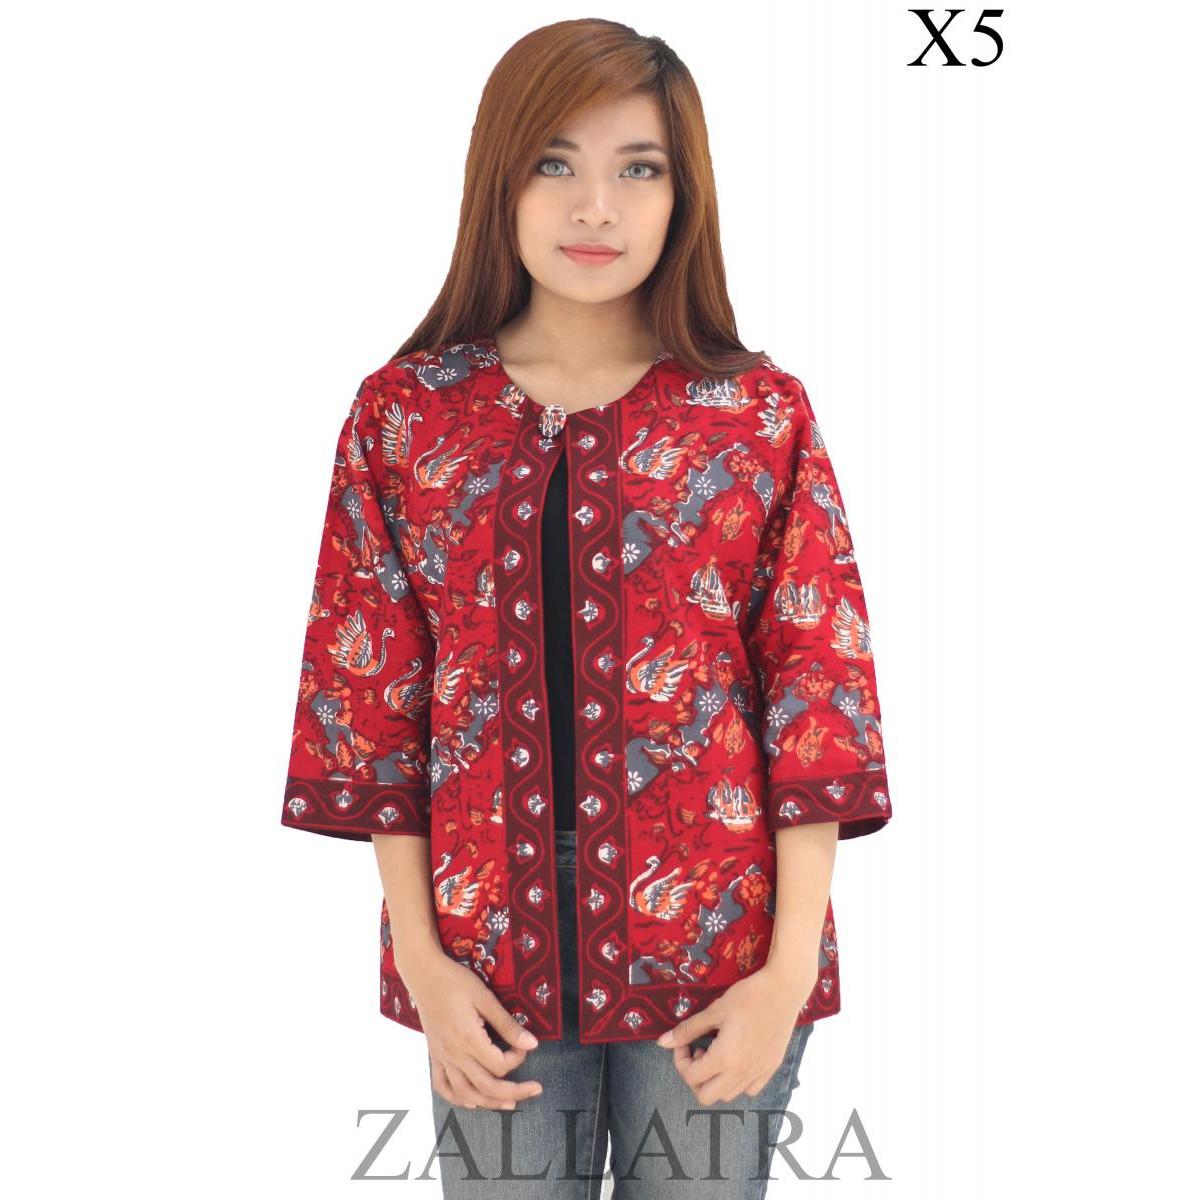  Model  Baju  Batik Wanita Motif Angso Duo Merah X5